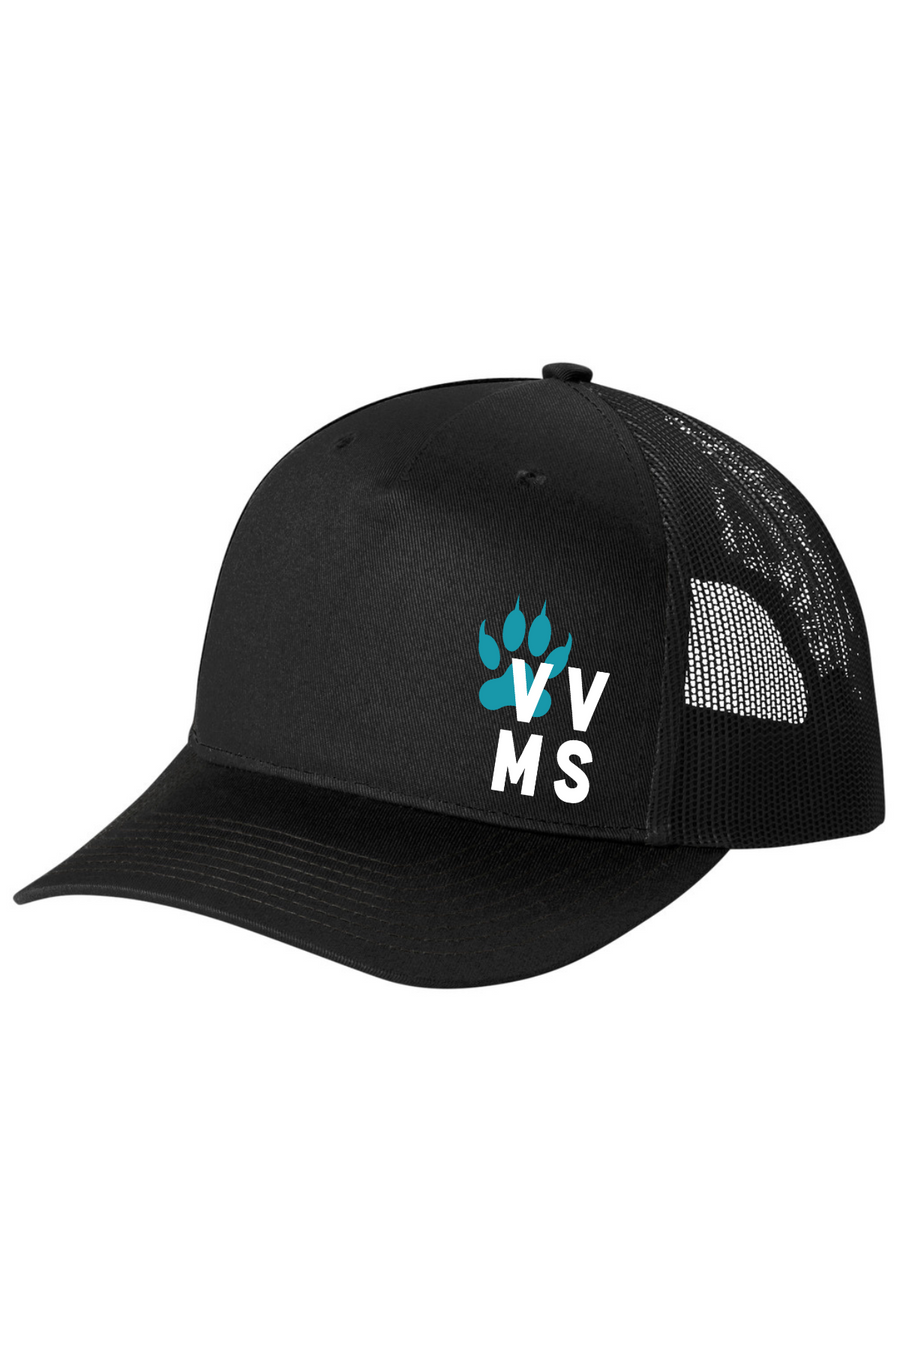 Valley View Middle School On-Demand Spirit Wear-Snapback Five-Panel Trucker Cap VVMS Logo